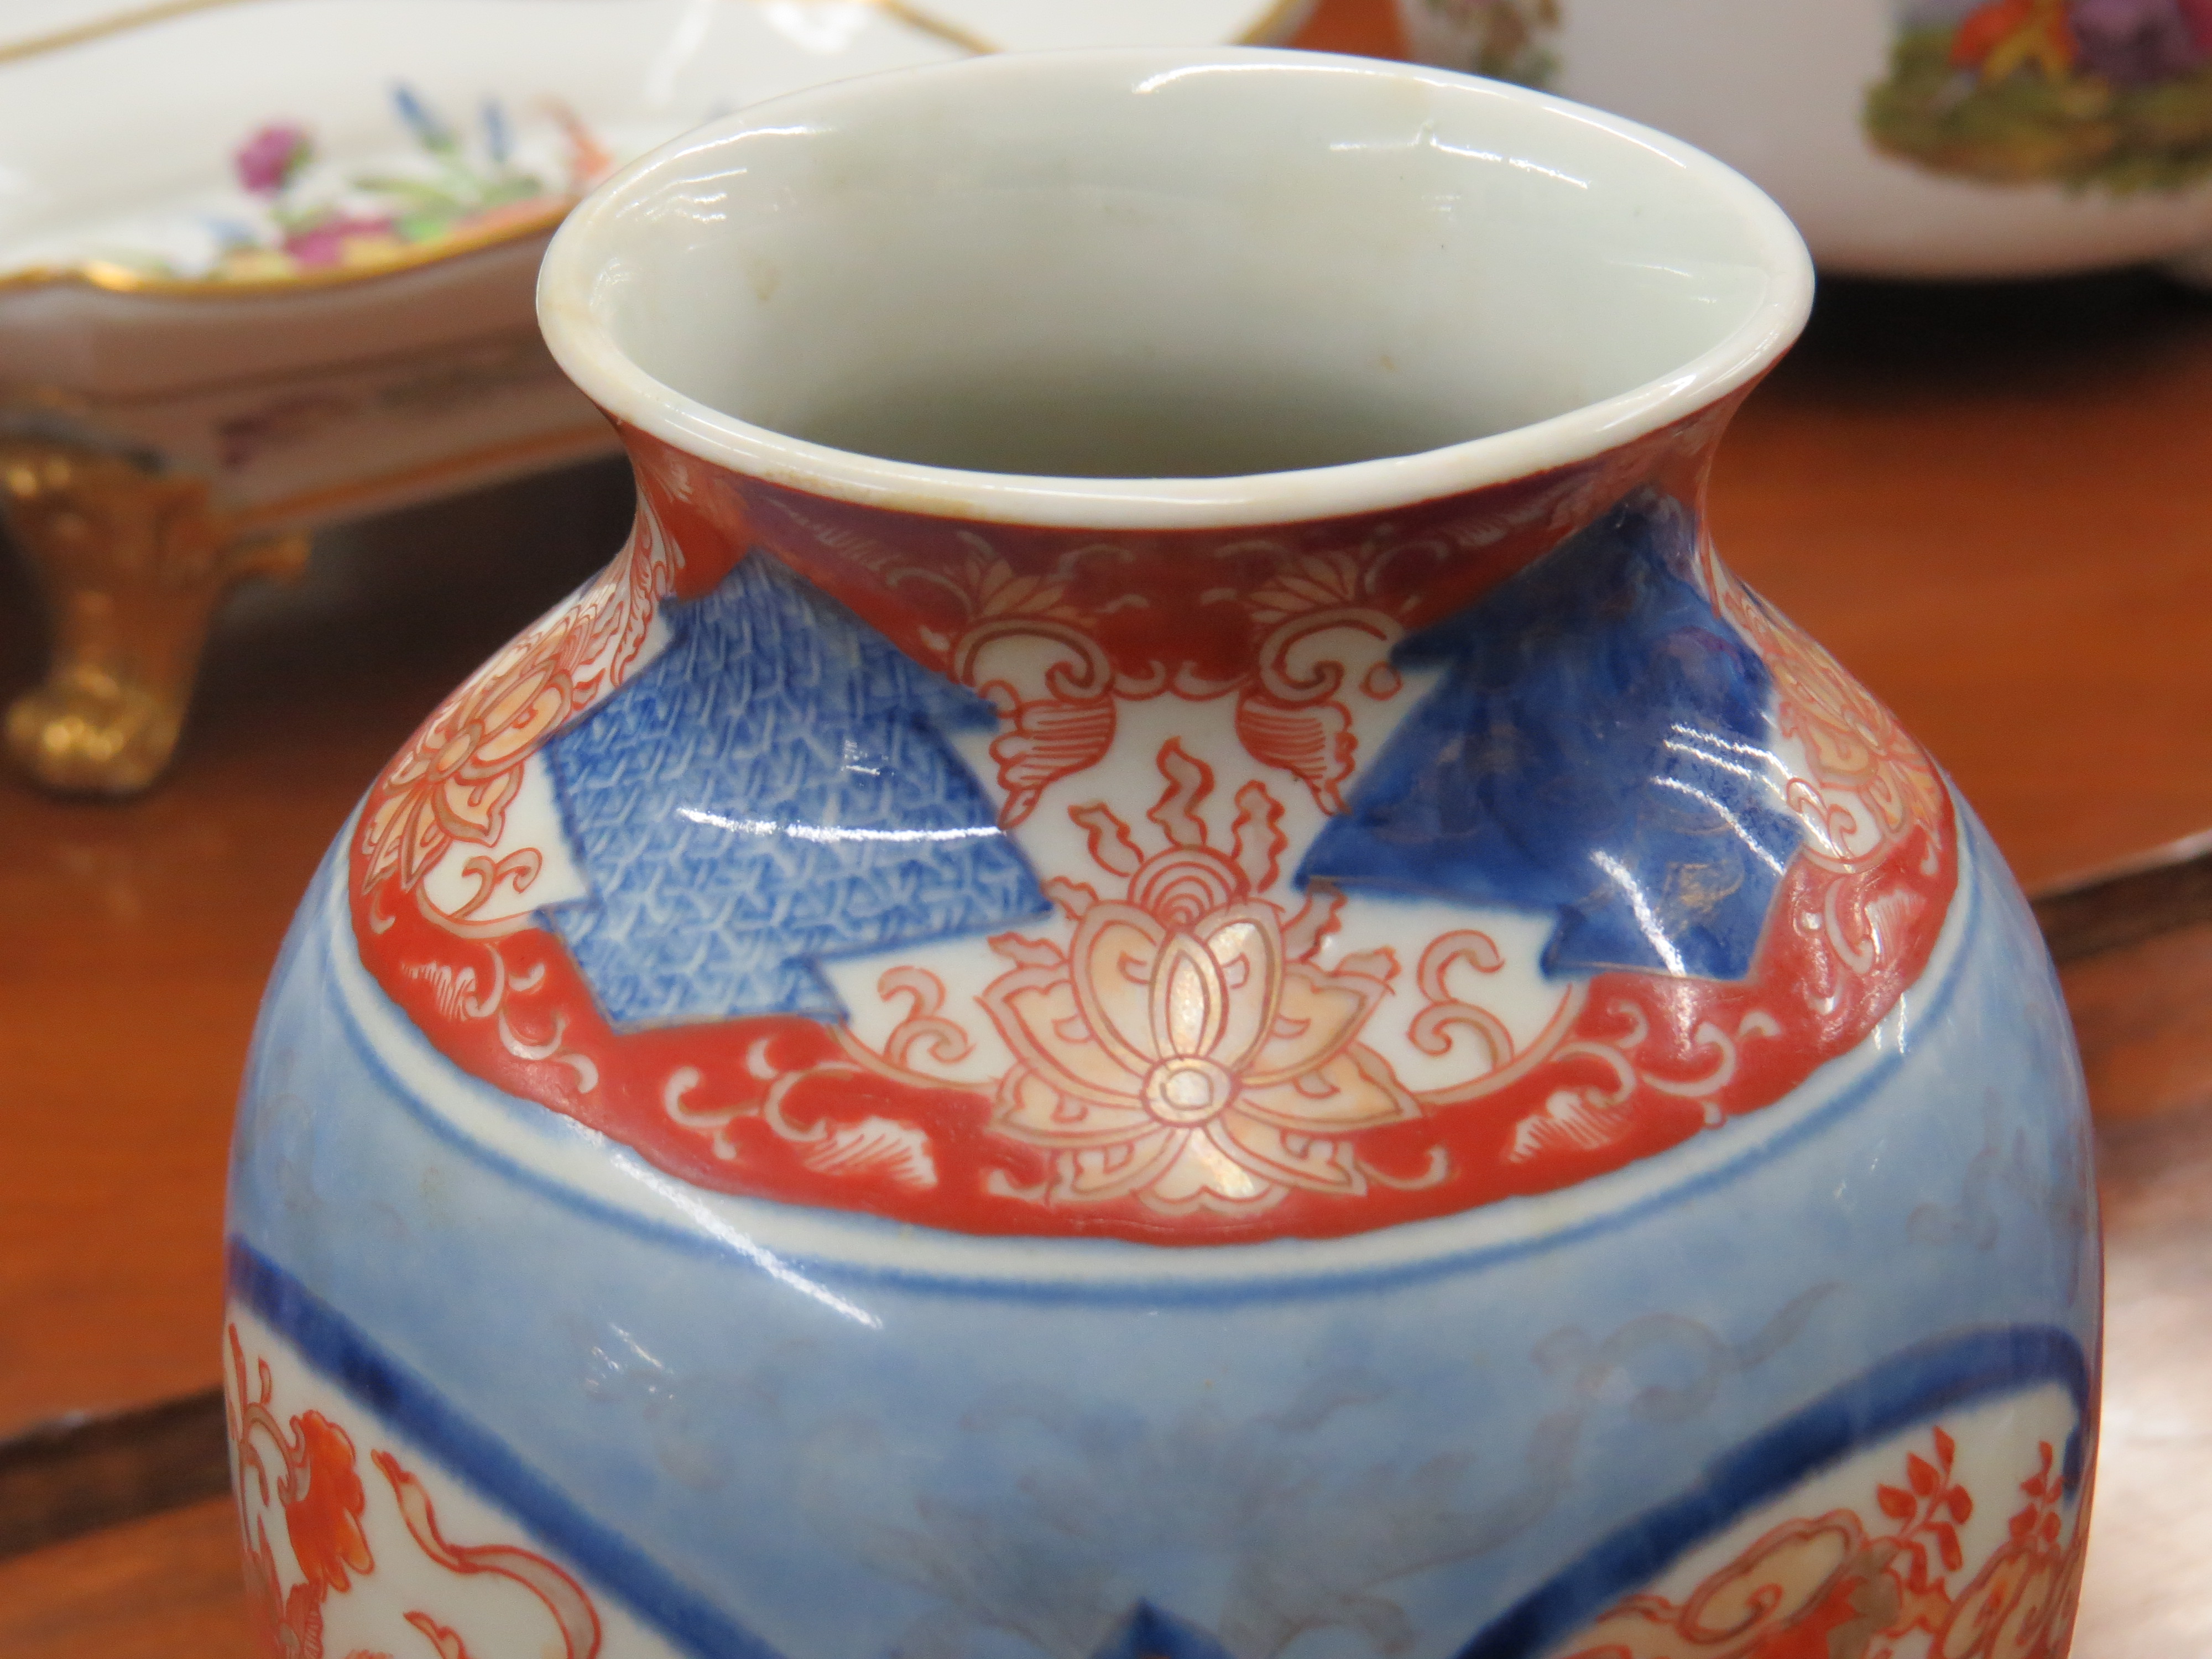 Pair of Japanese Imari Porcelain Vases